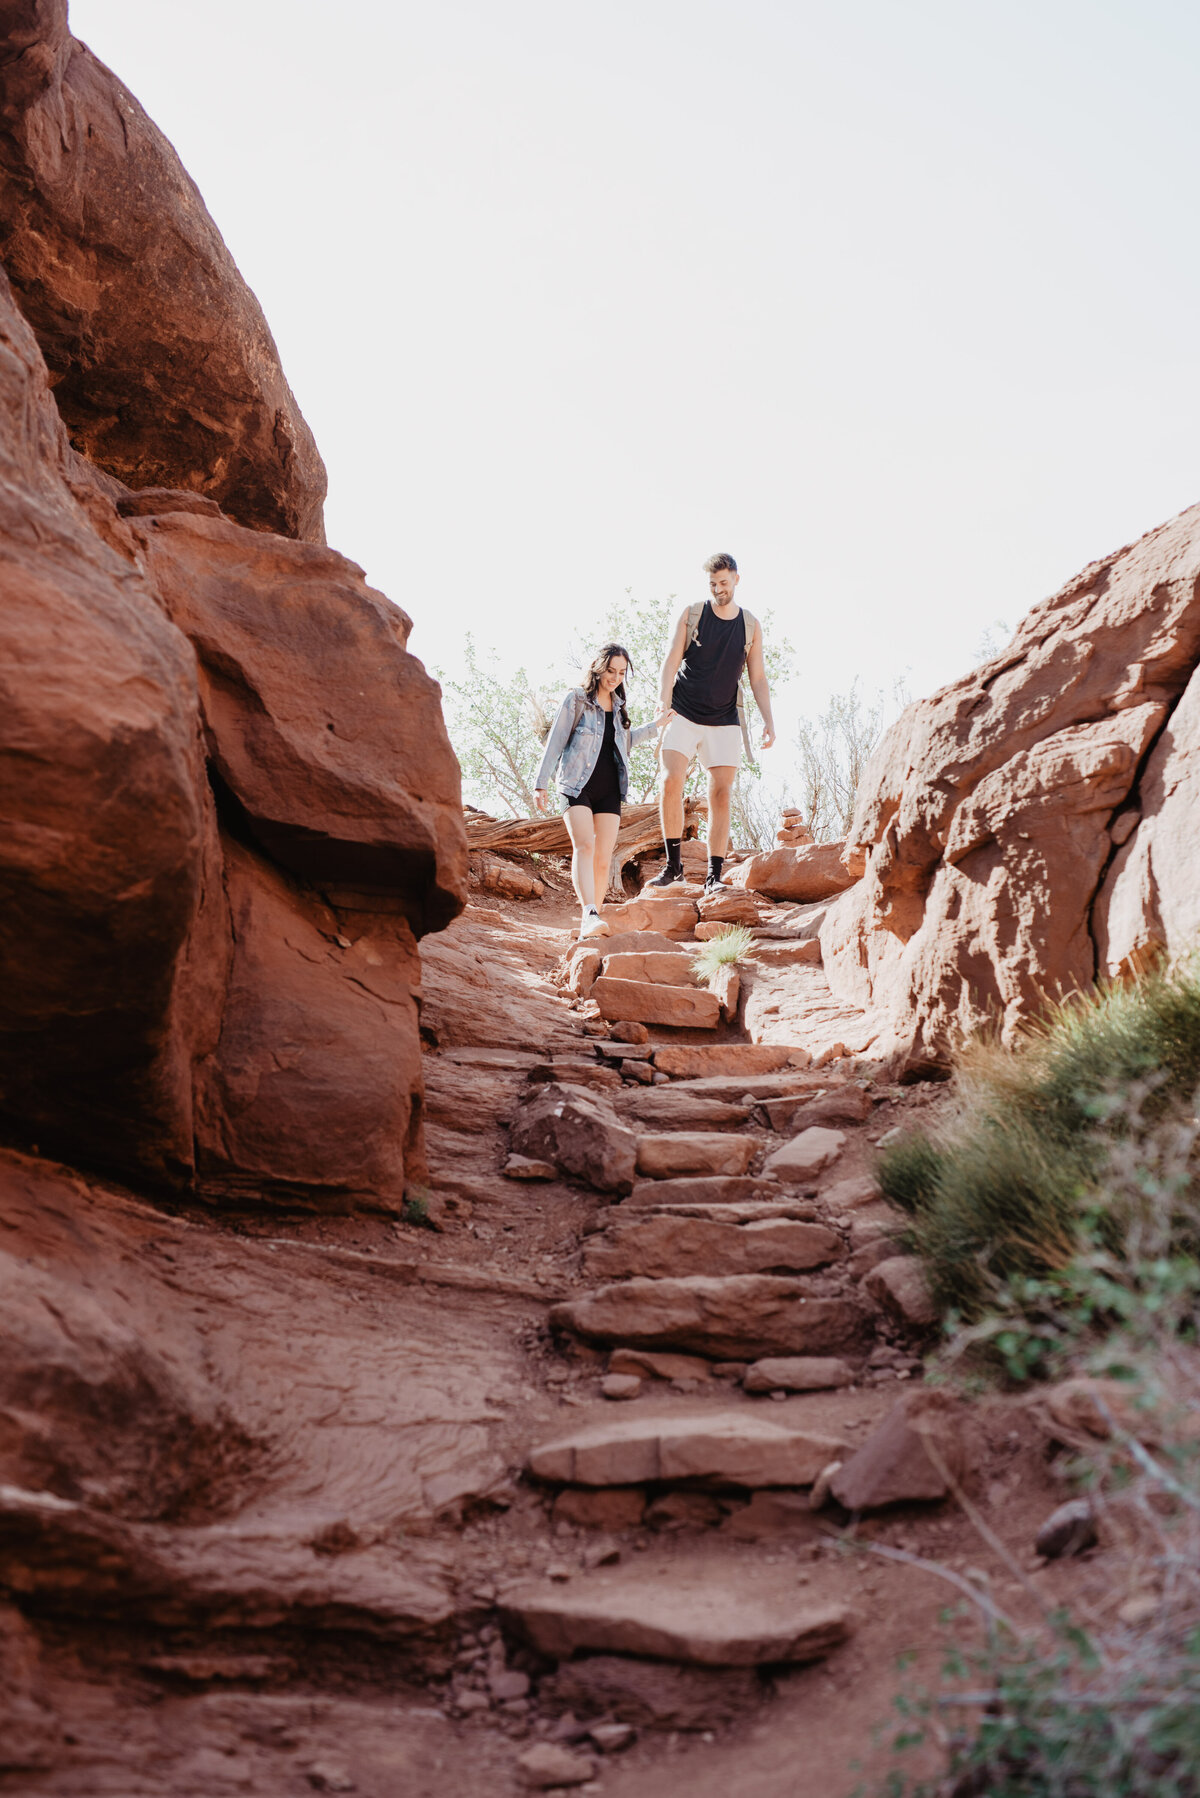 Utah Elopement Photographer captures bride and groom hiking